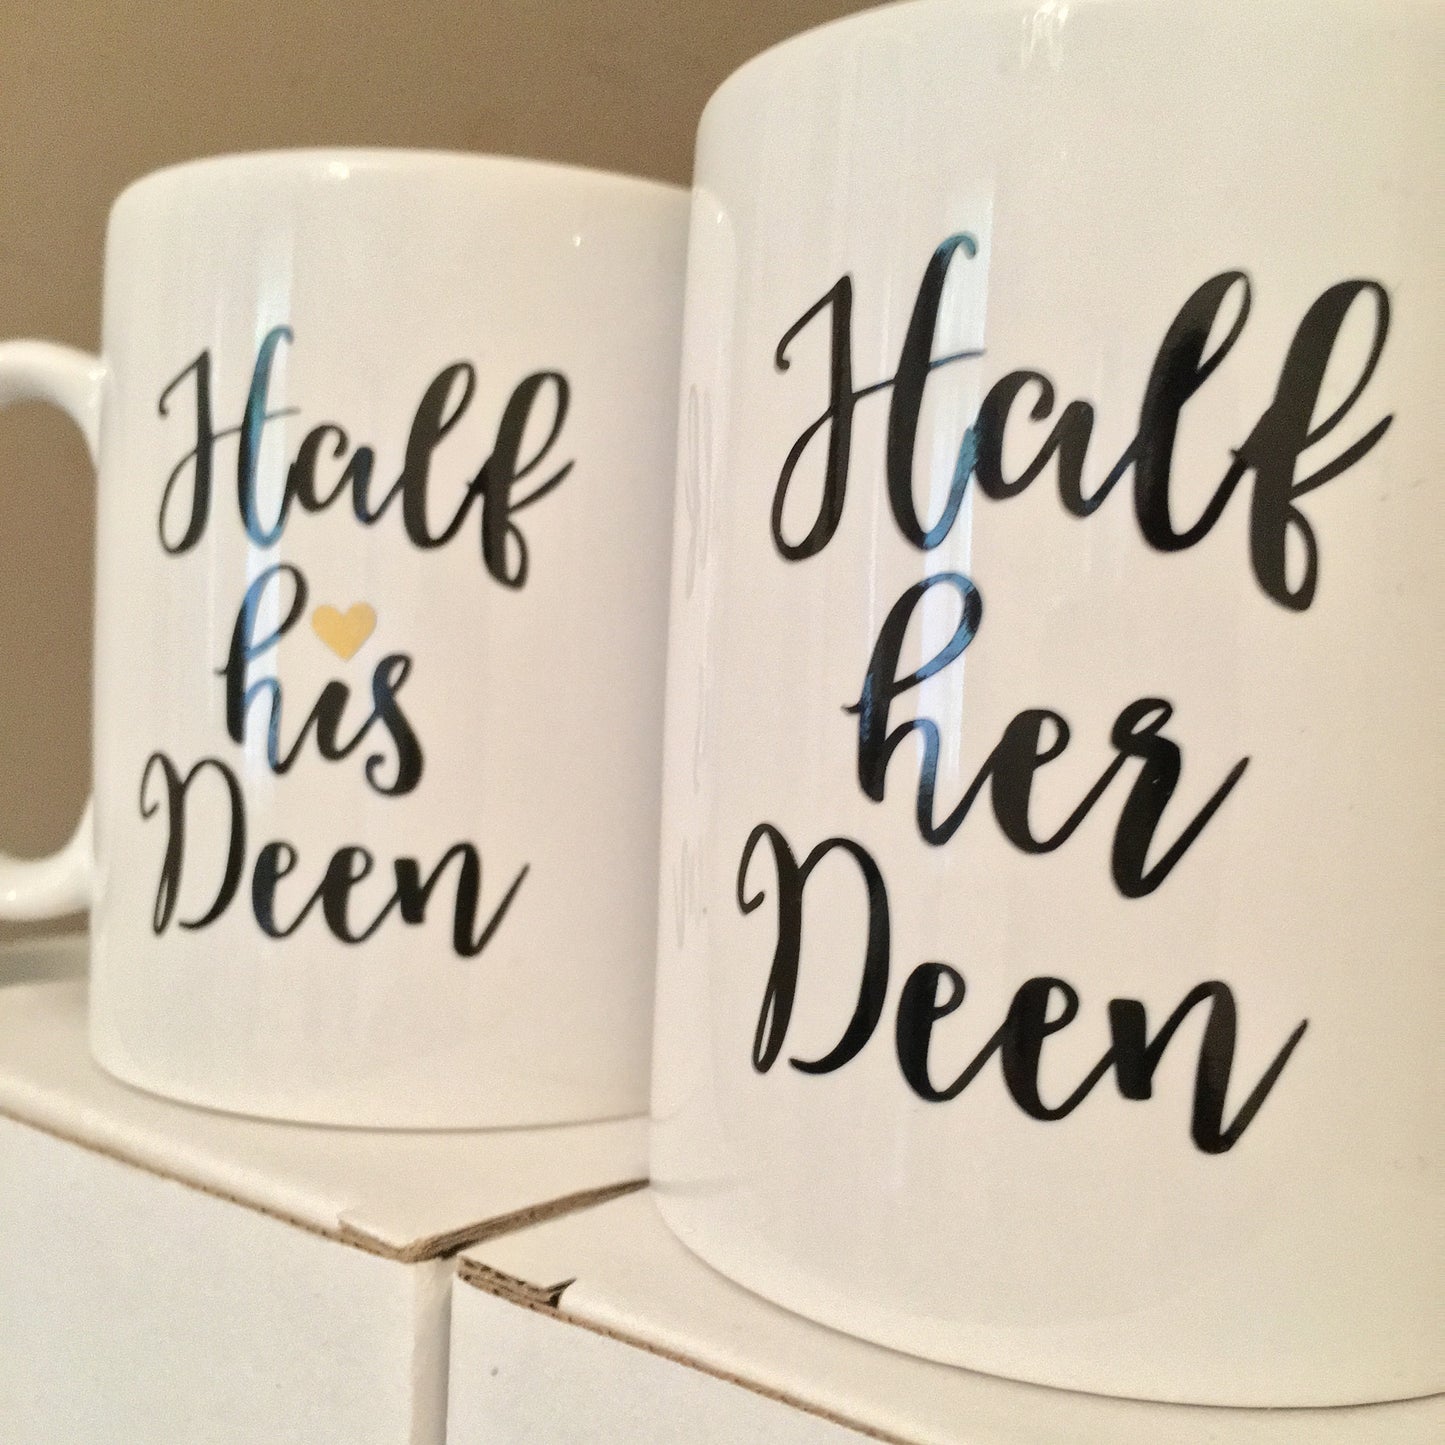 New Half His and Her Deen Mug Set